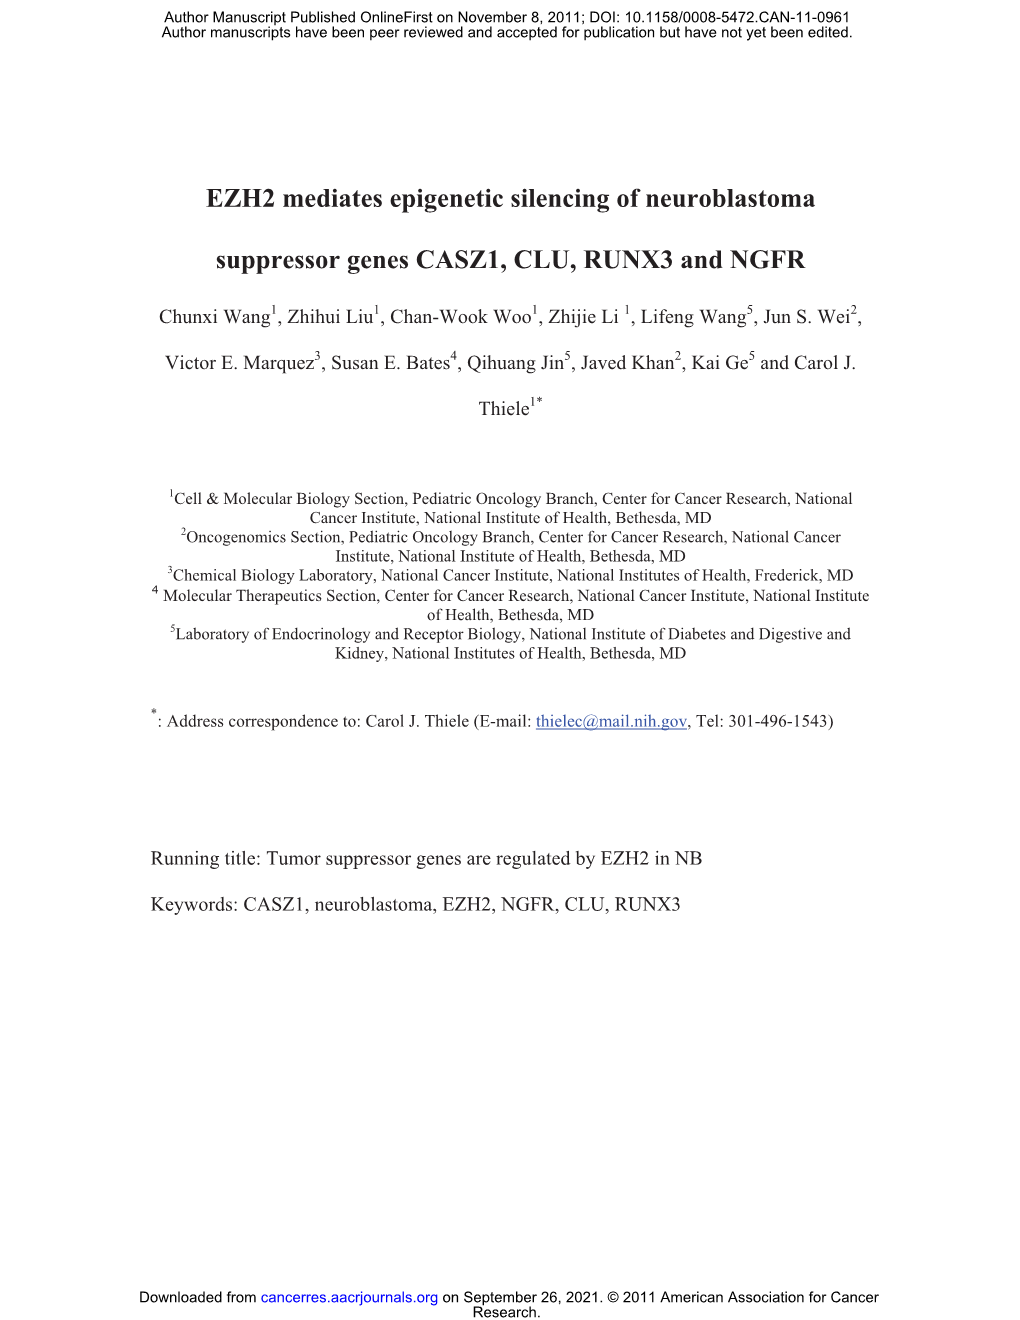 EZH2 Mediates Epigenetic Silencing of Neuroblastoma Suppressor Genes CASZ1, CLU, RUNX3 and NGFR